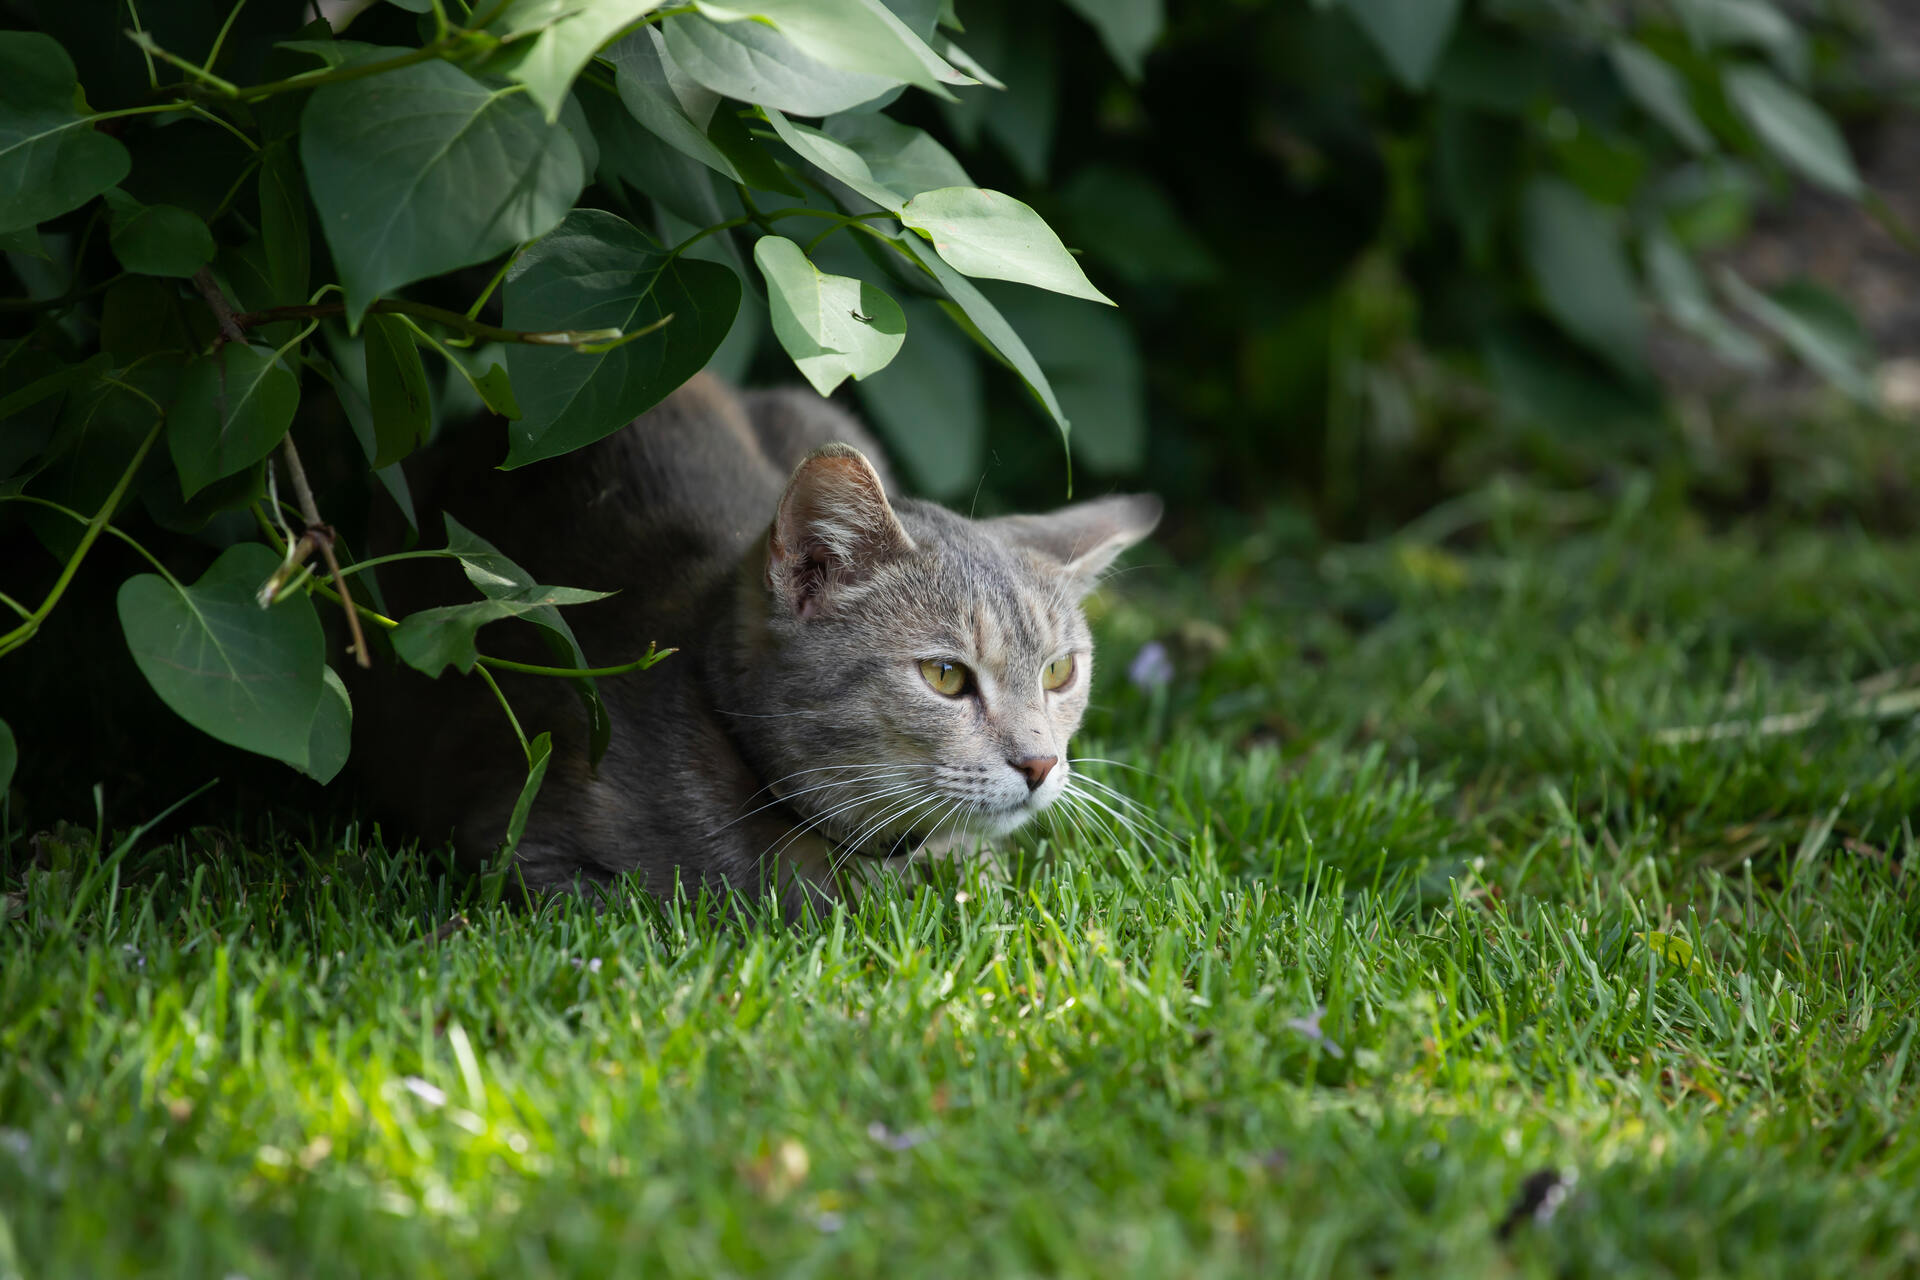 A cat hiding in a bush outdoors